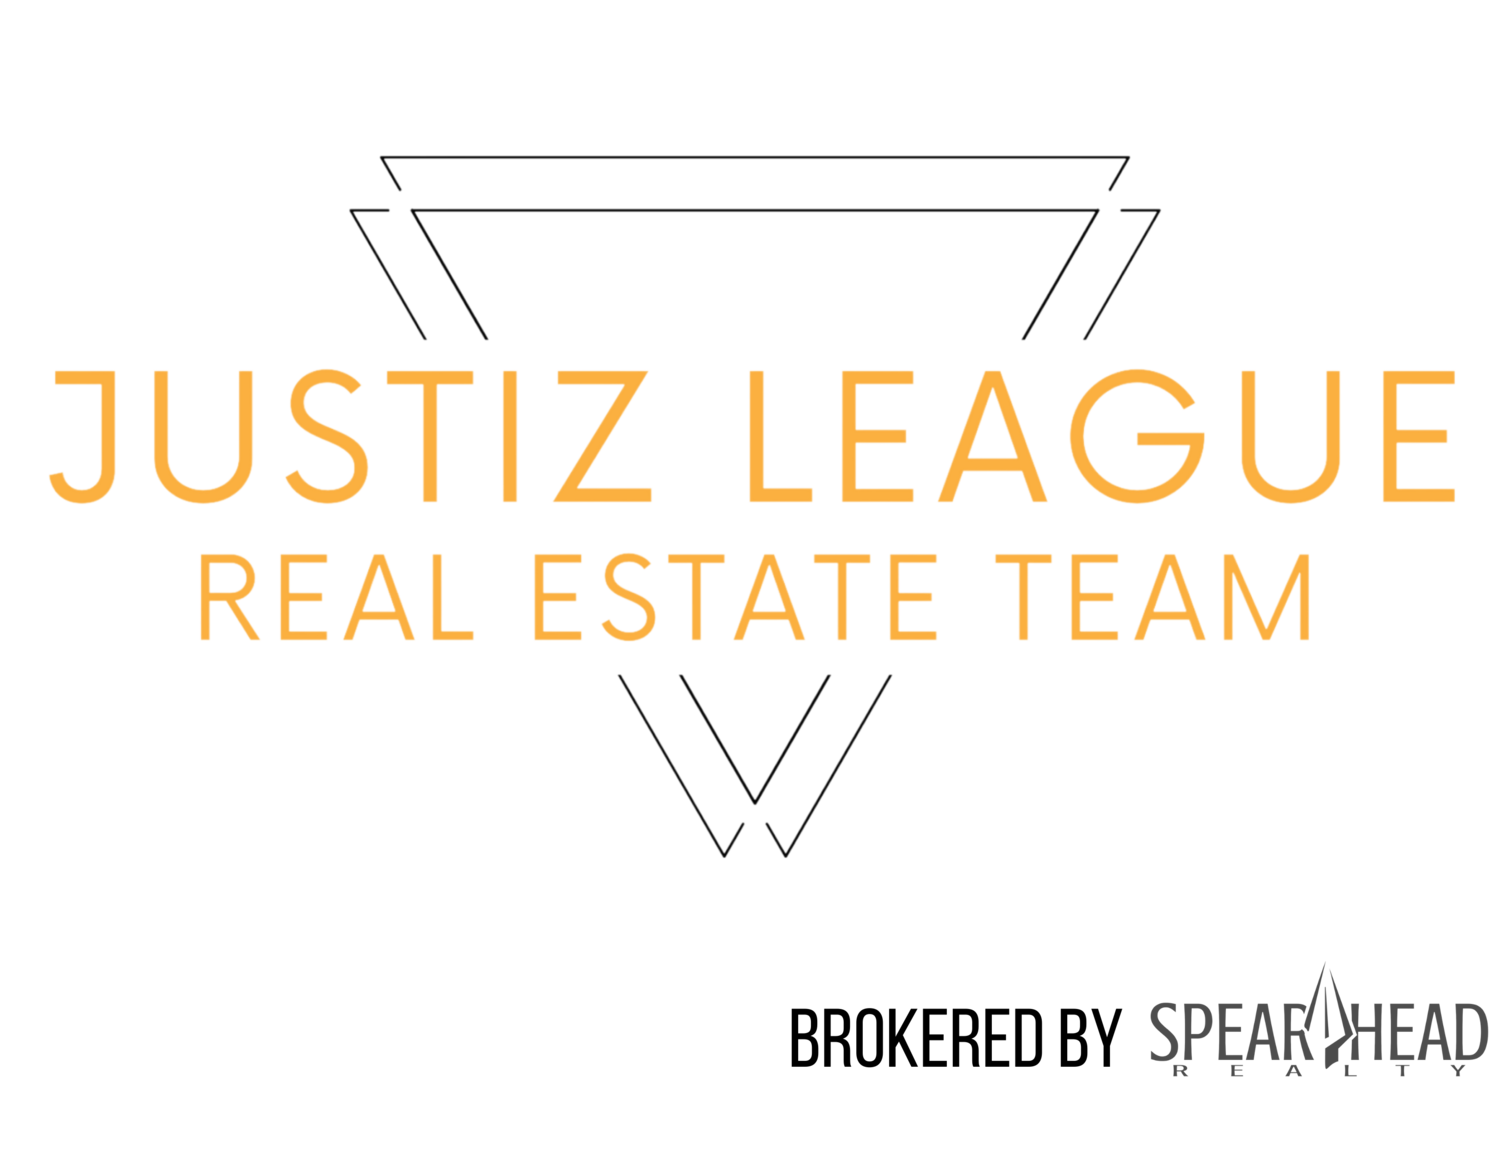 Justiz league Real Estate Team